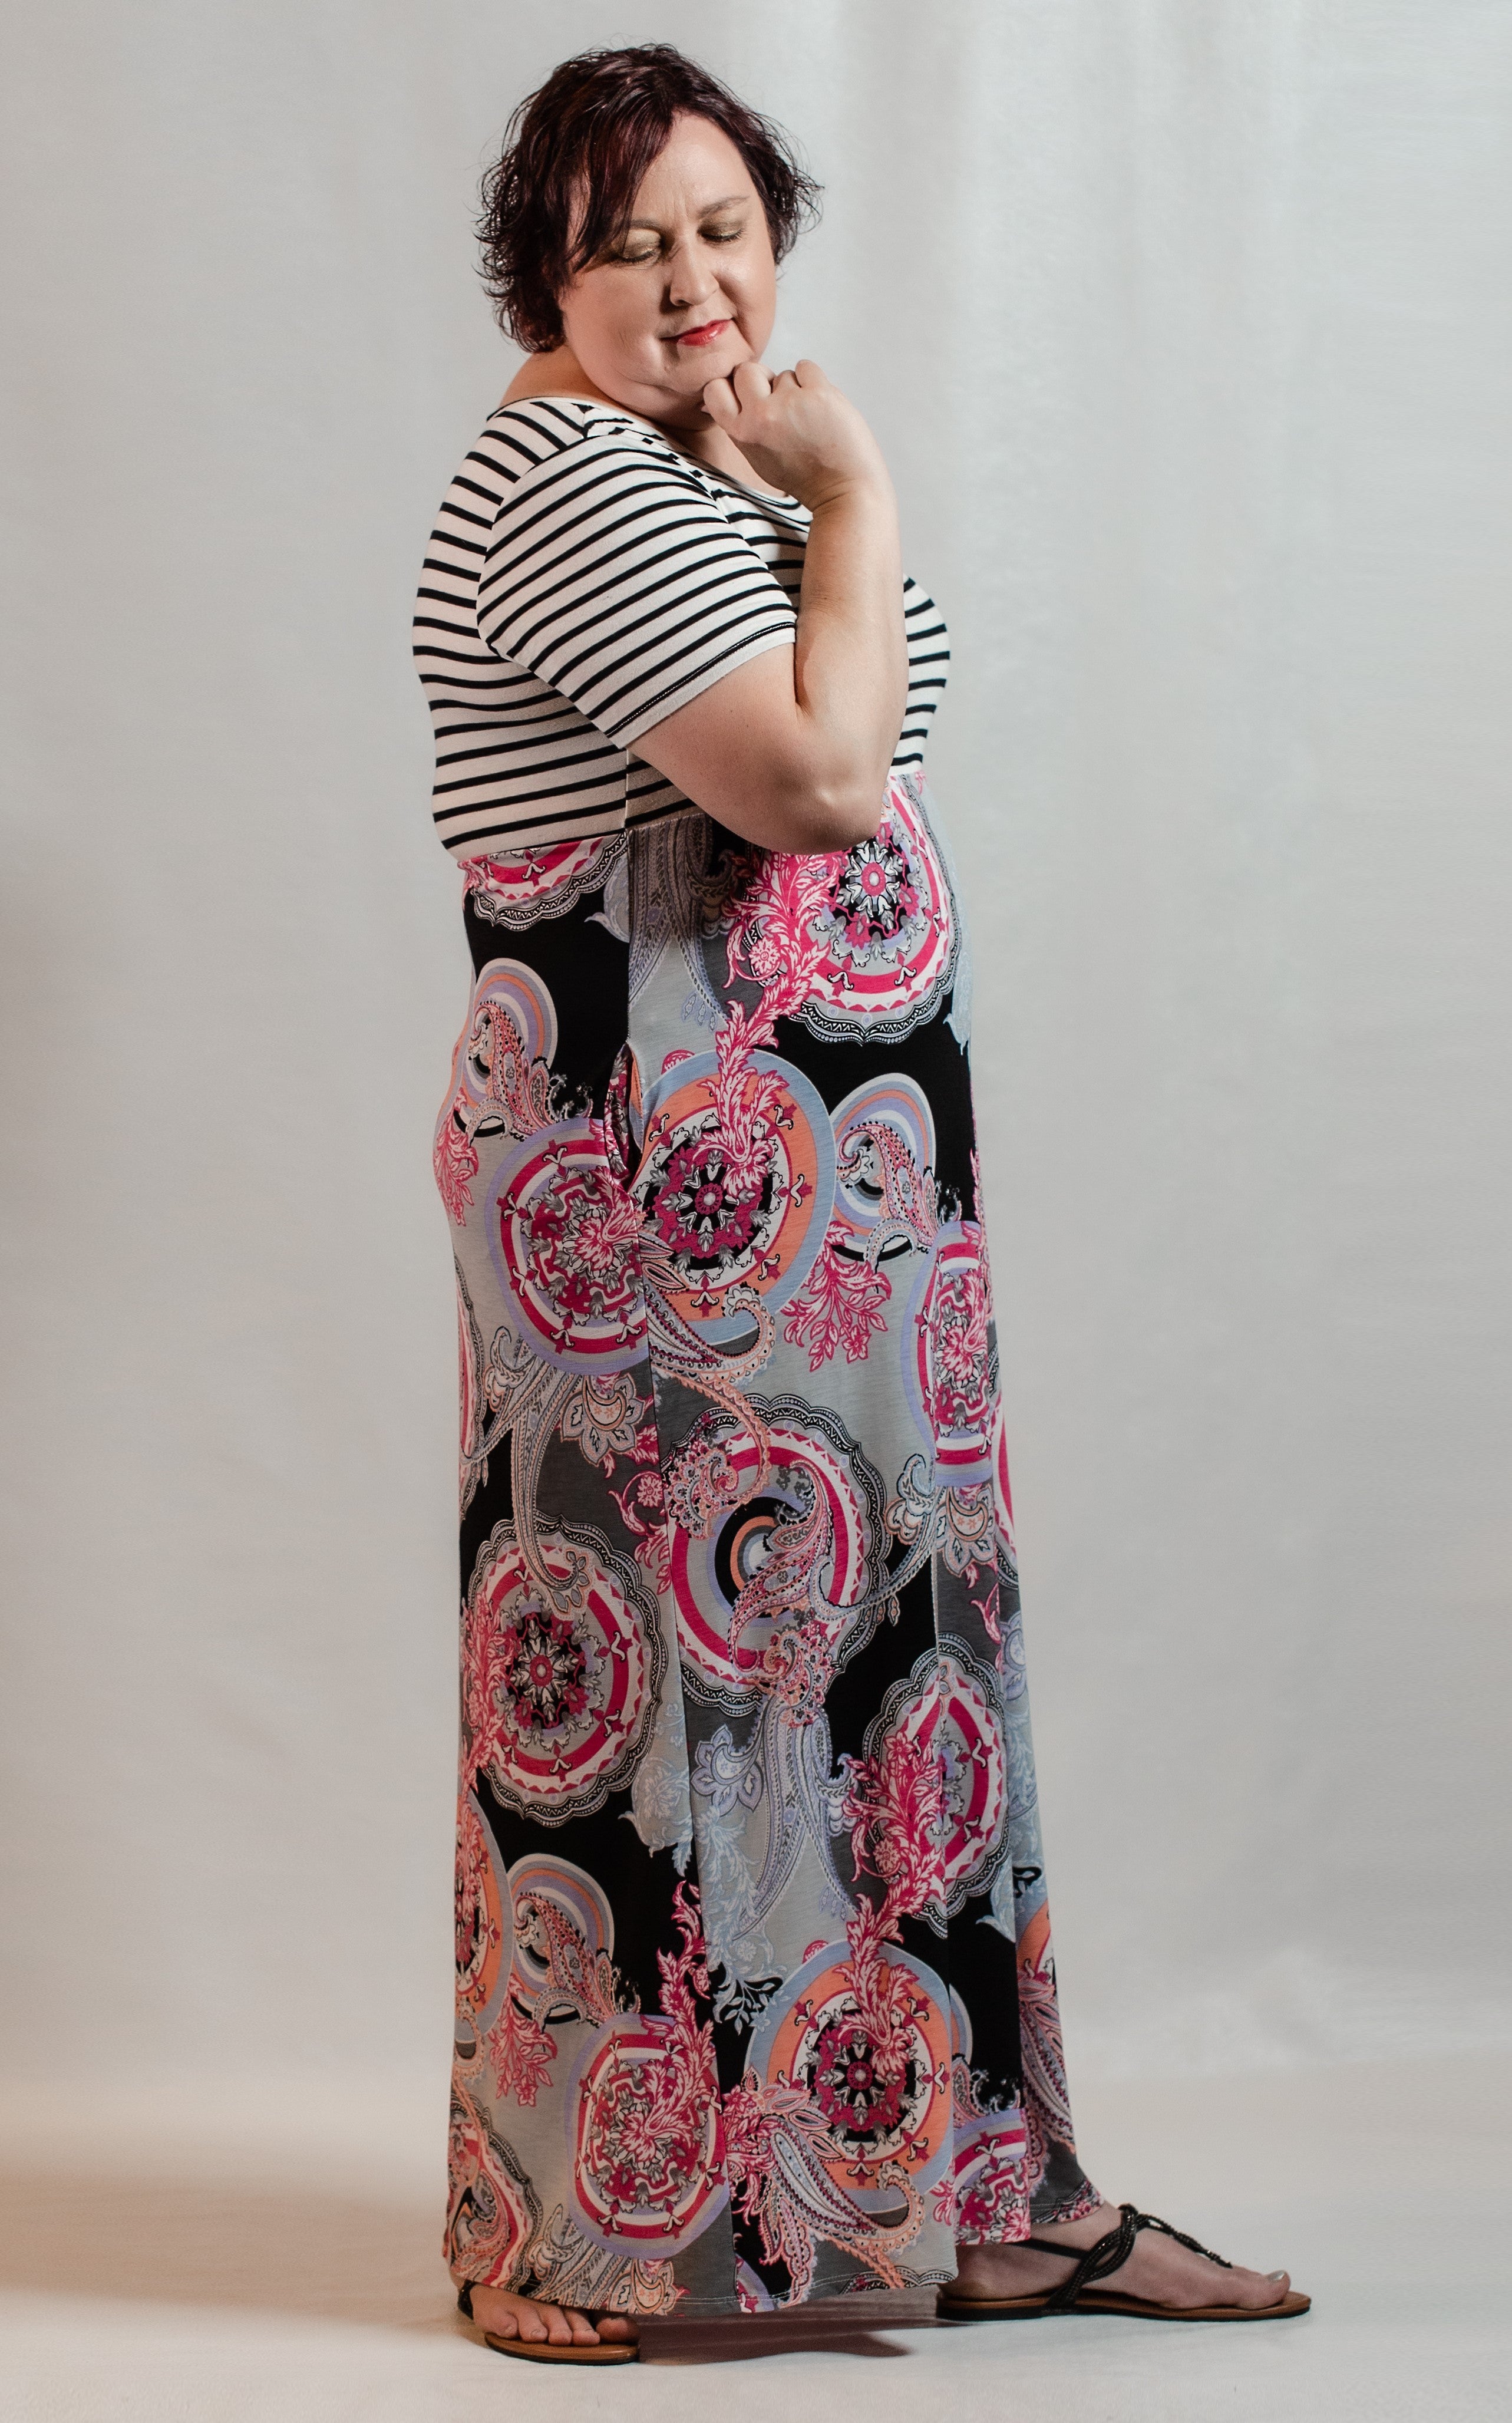 Plus Size Stripe and Multi Color Print Maxi Dress